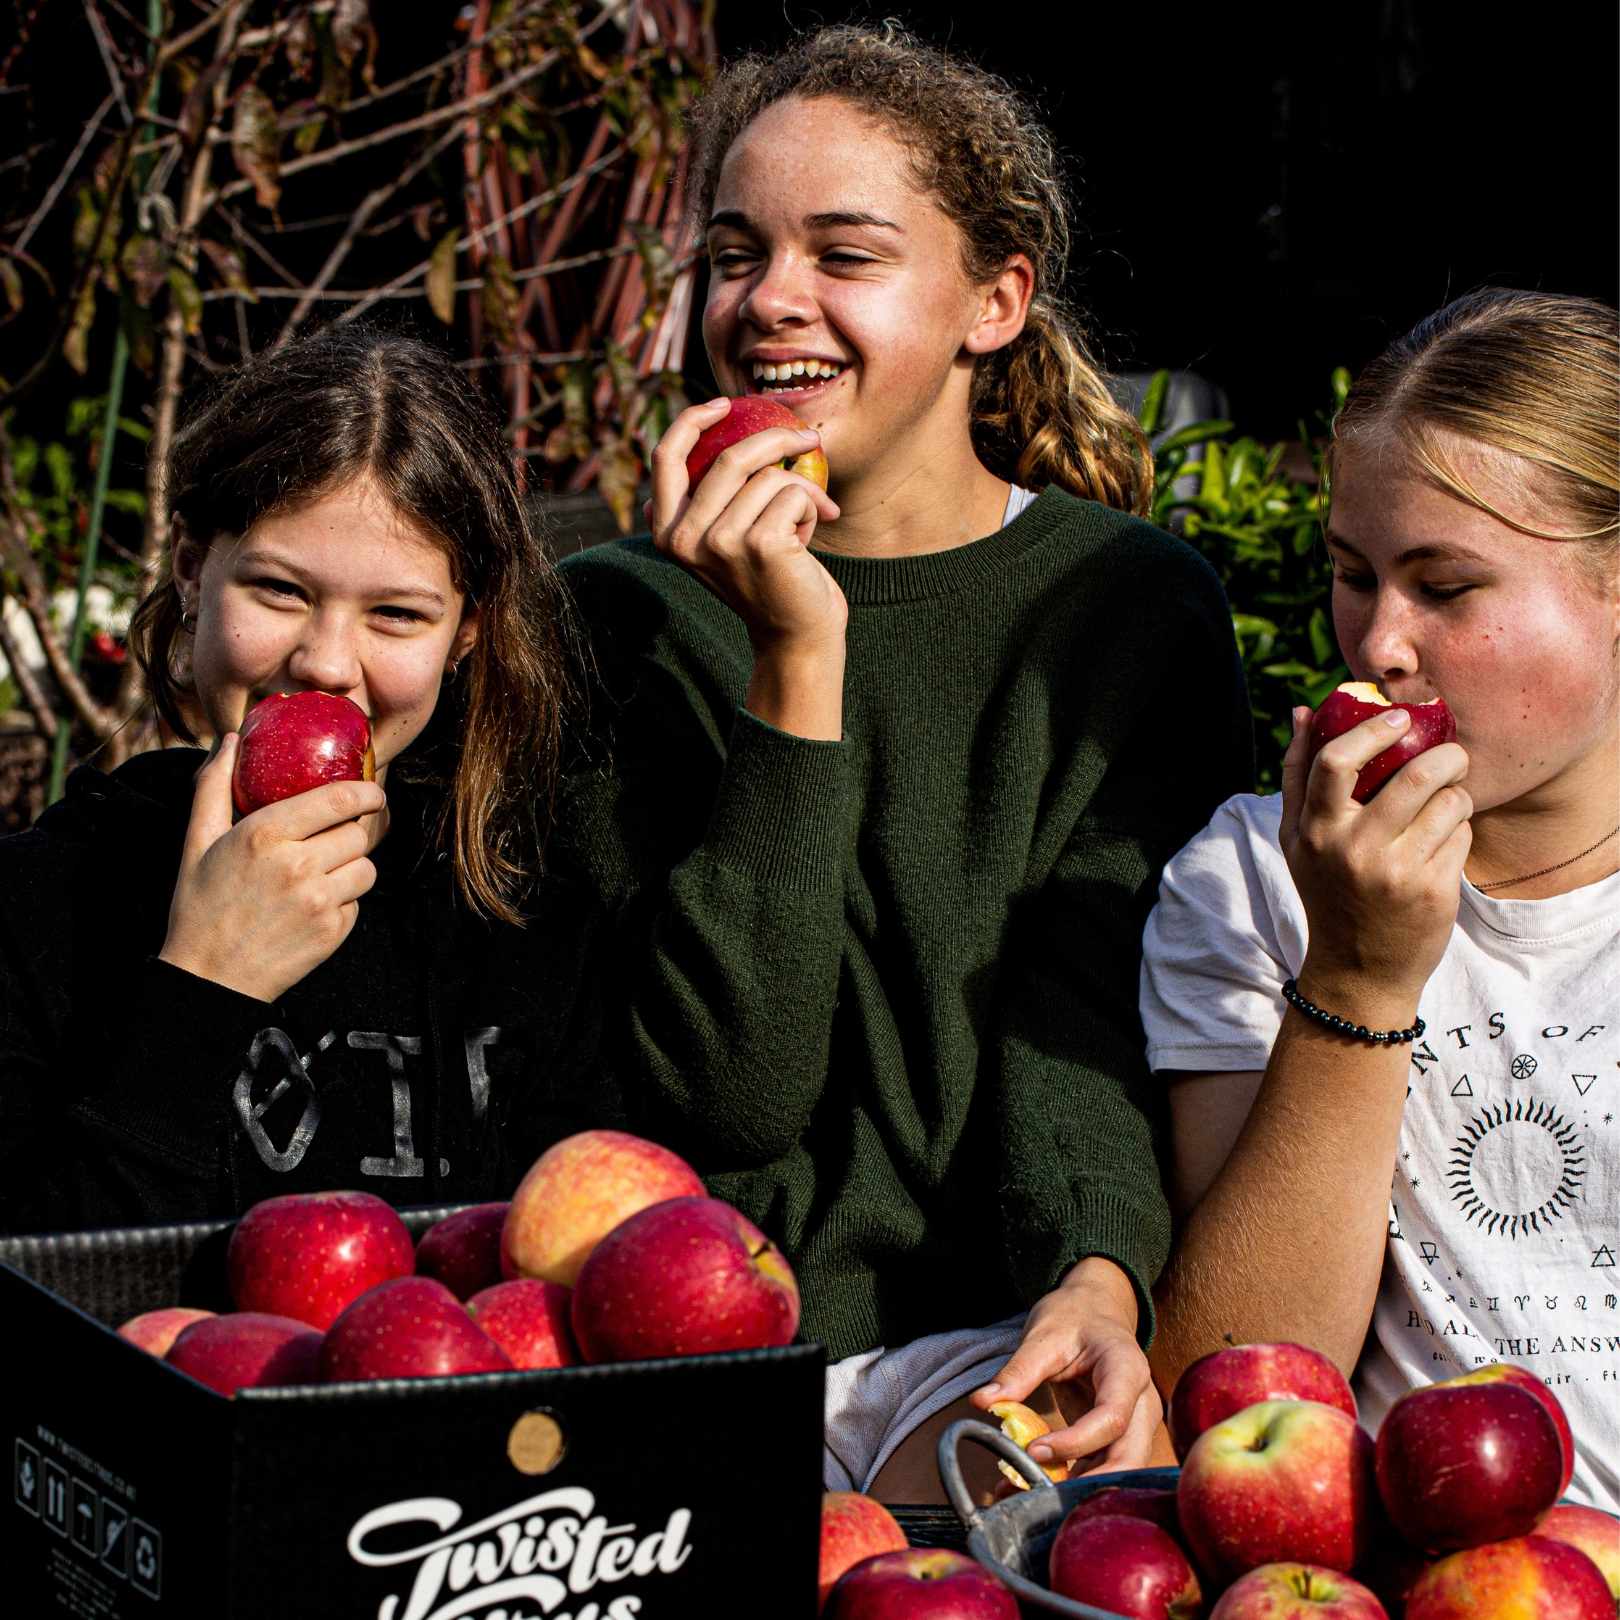 Buy Apples - Mariri Red Online NZ